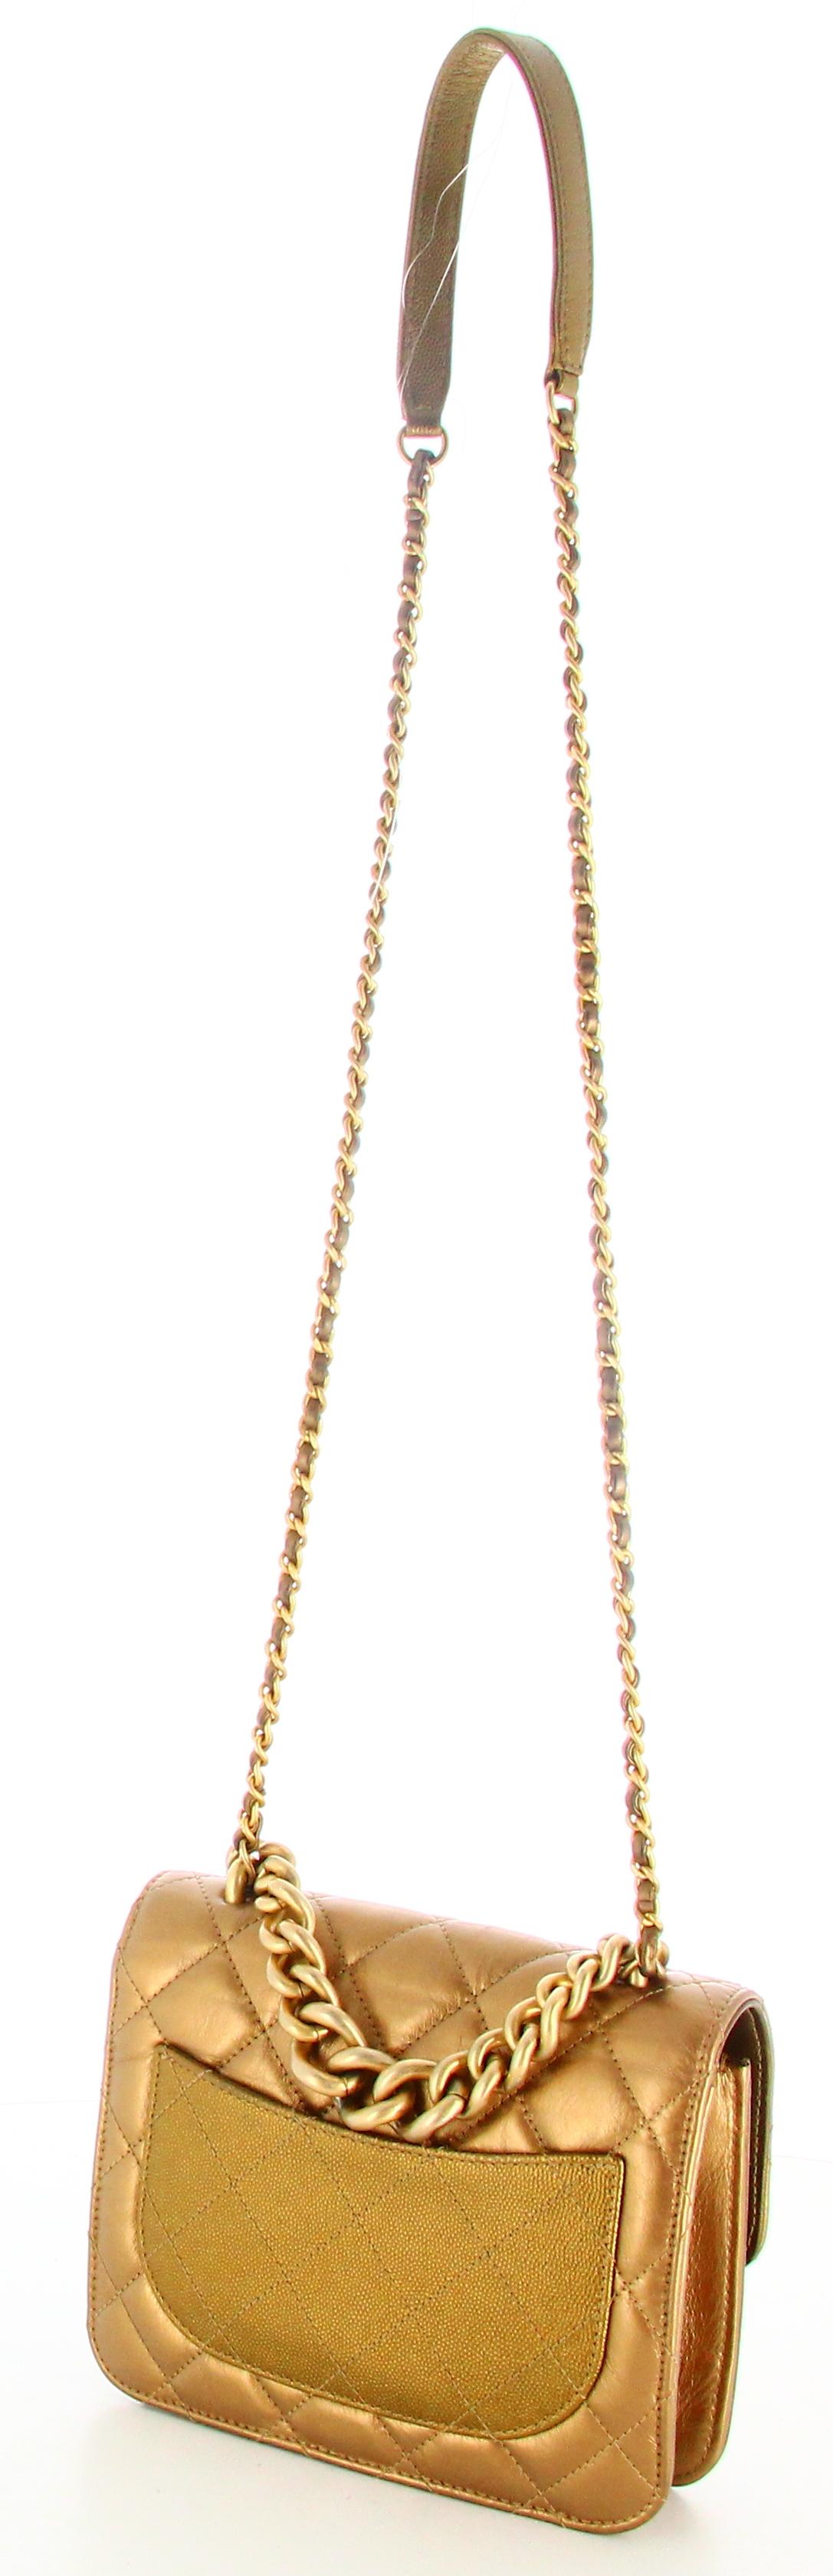 2019 Mini Bag Chanel Handle Flap Golden 2